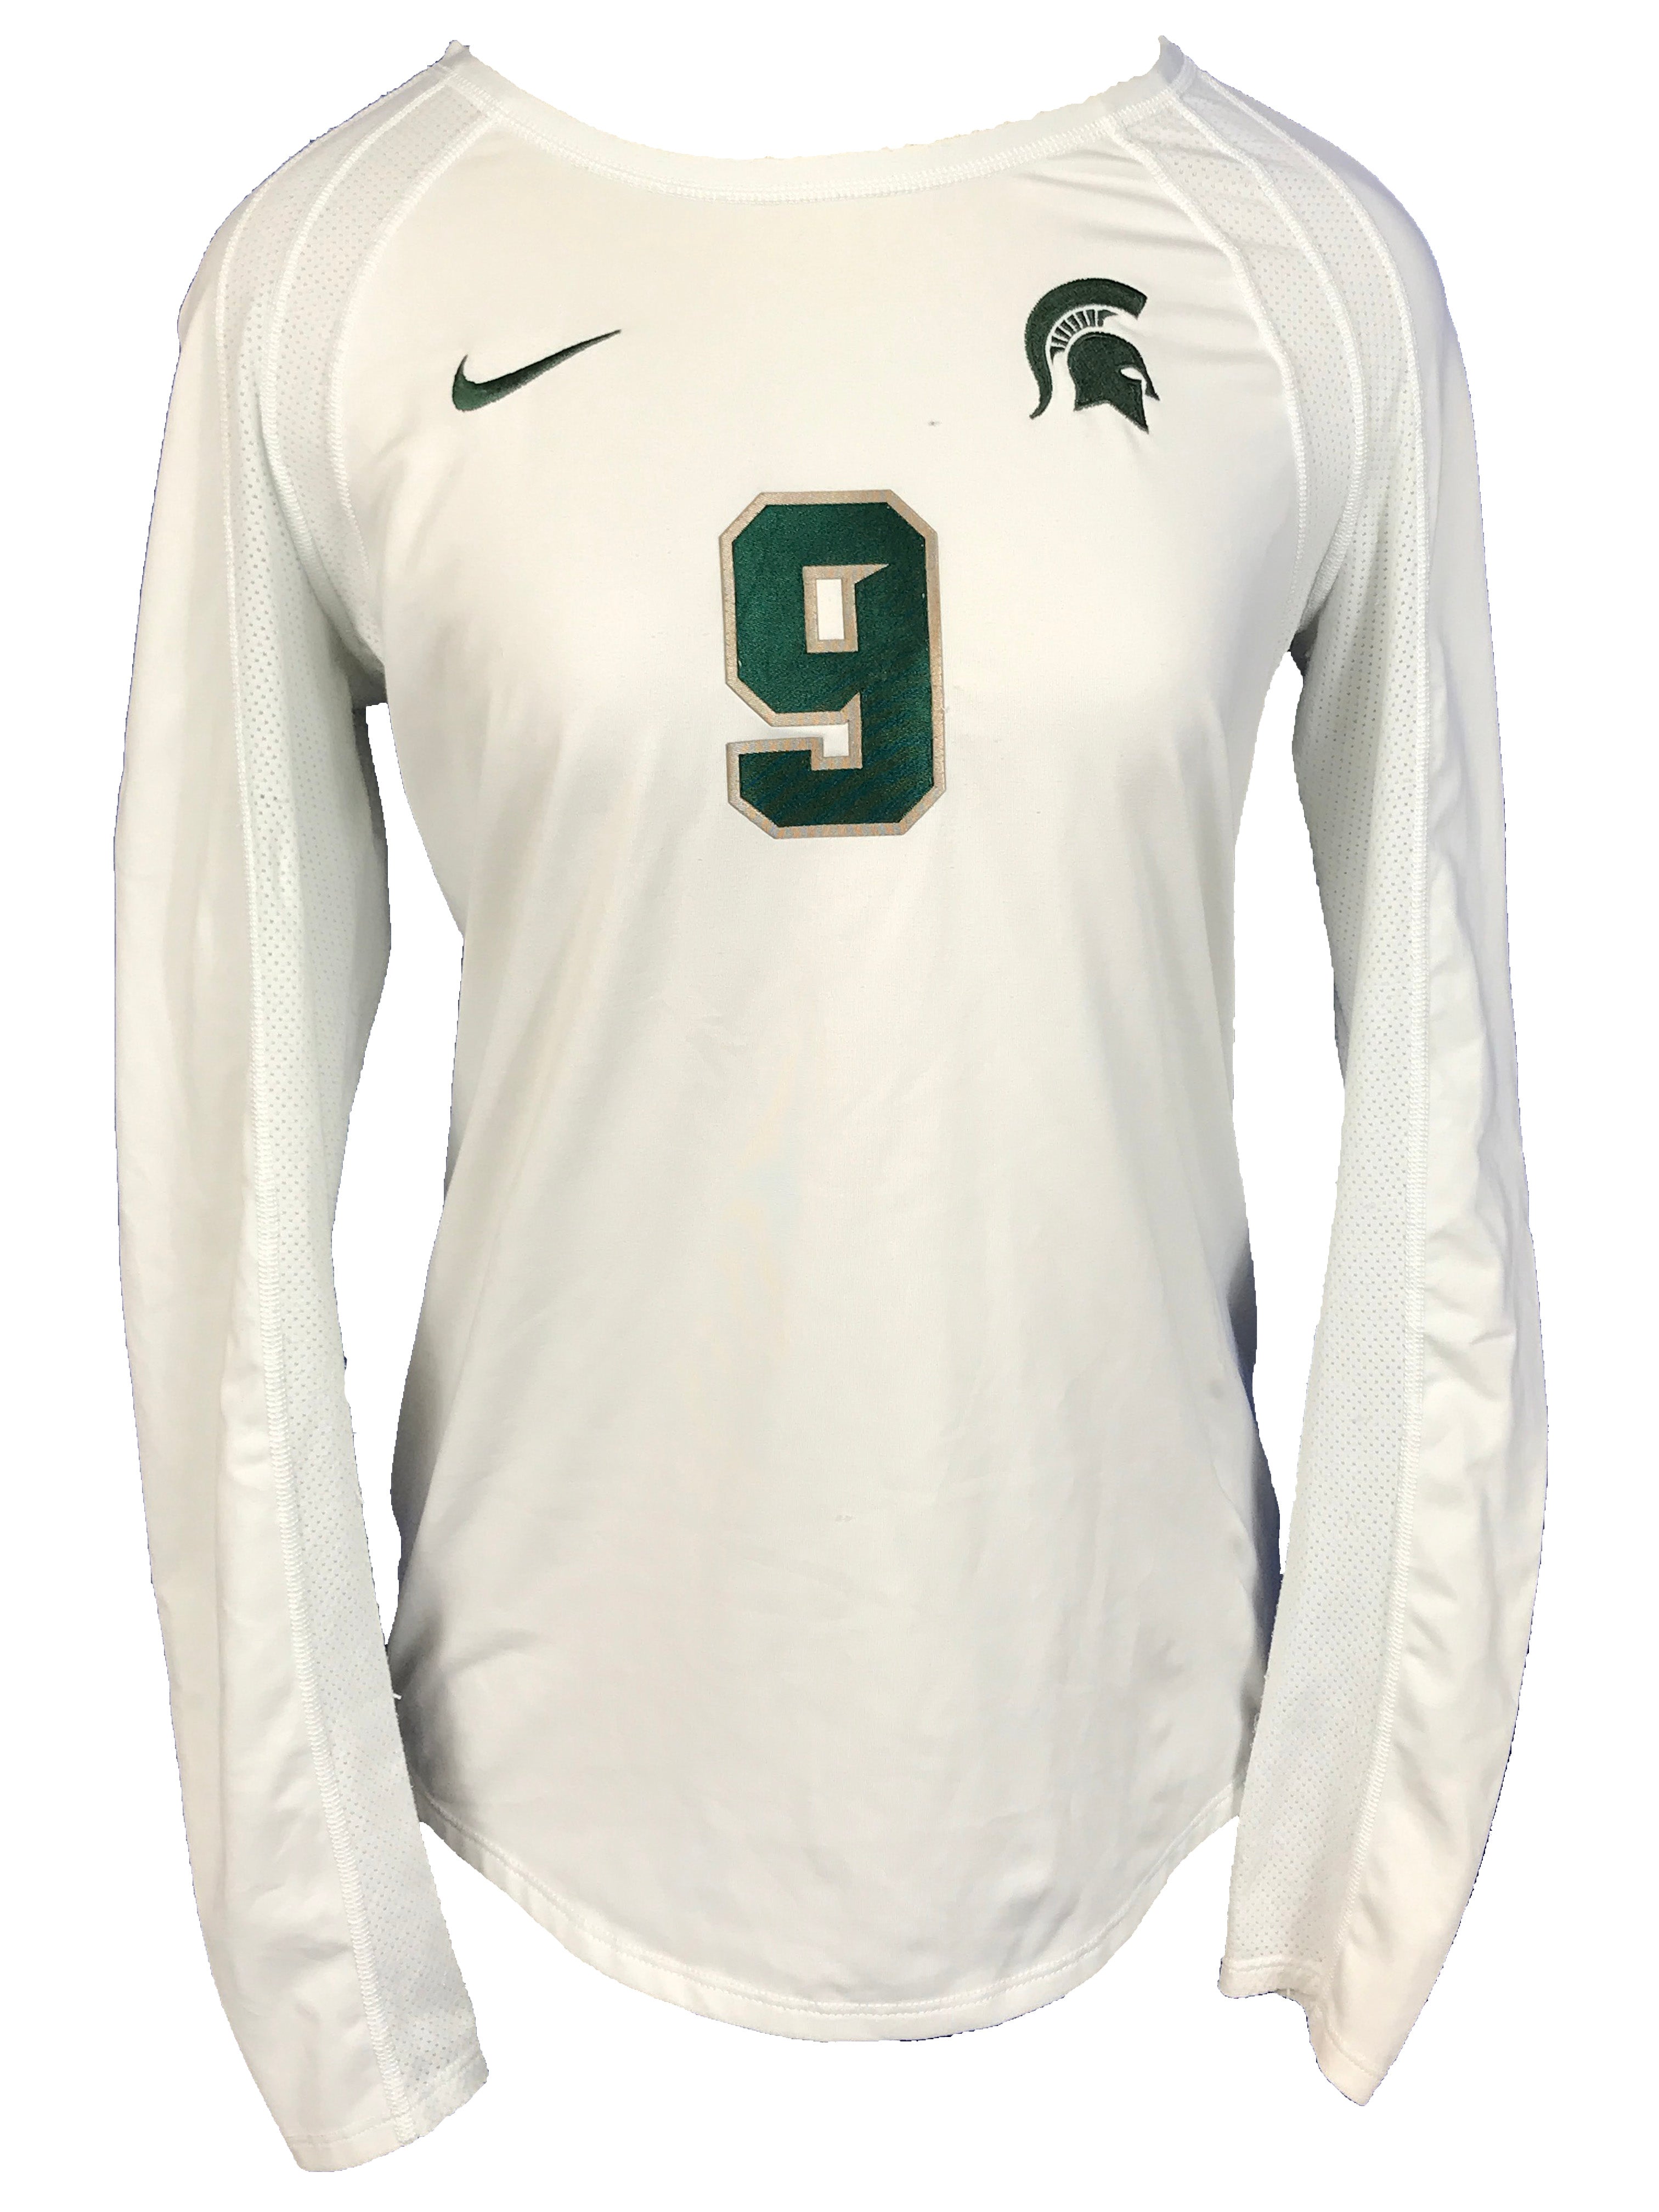 Nike White Long Sleeve MSU Volleyball Jersey #9 Women's Size L